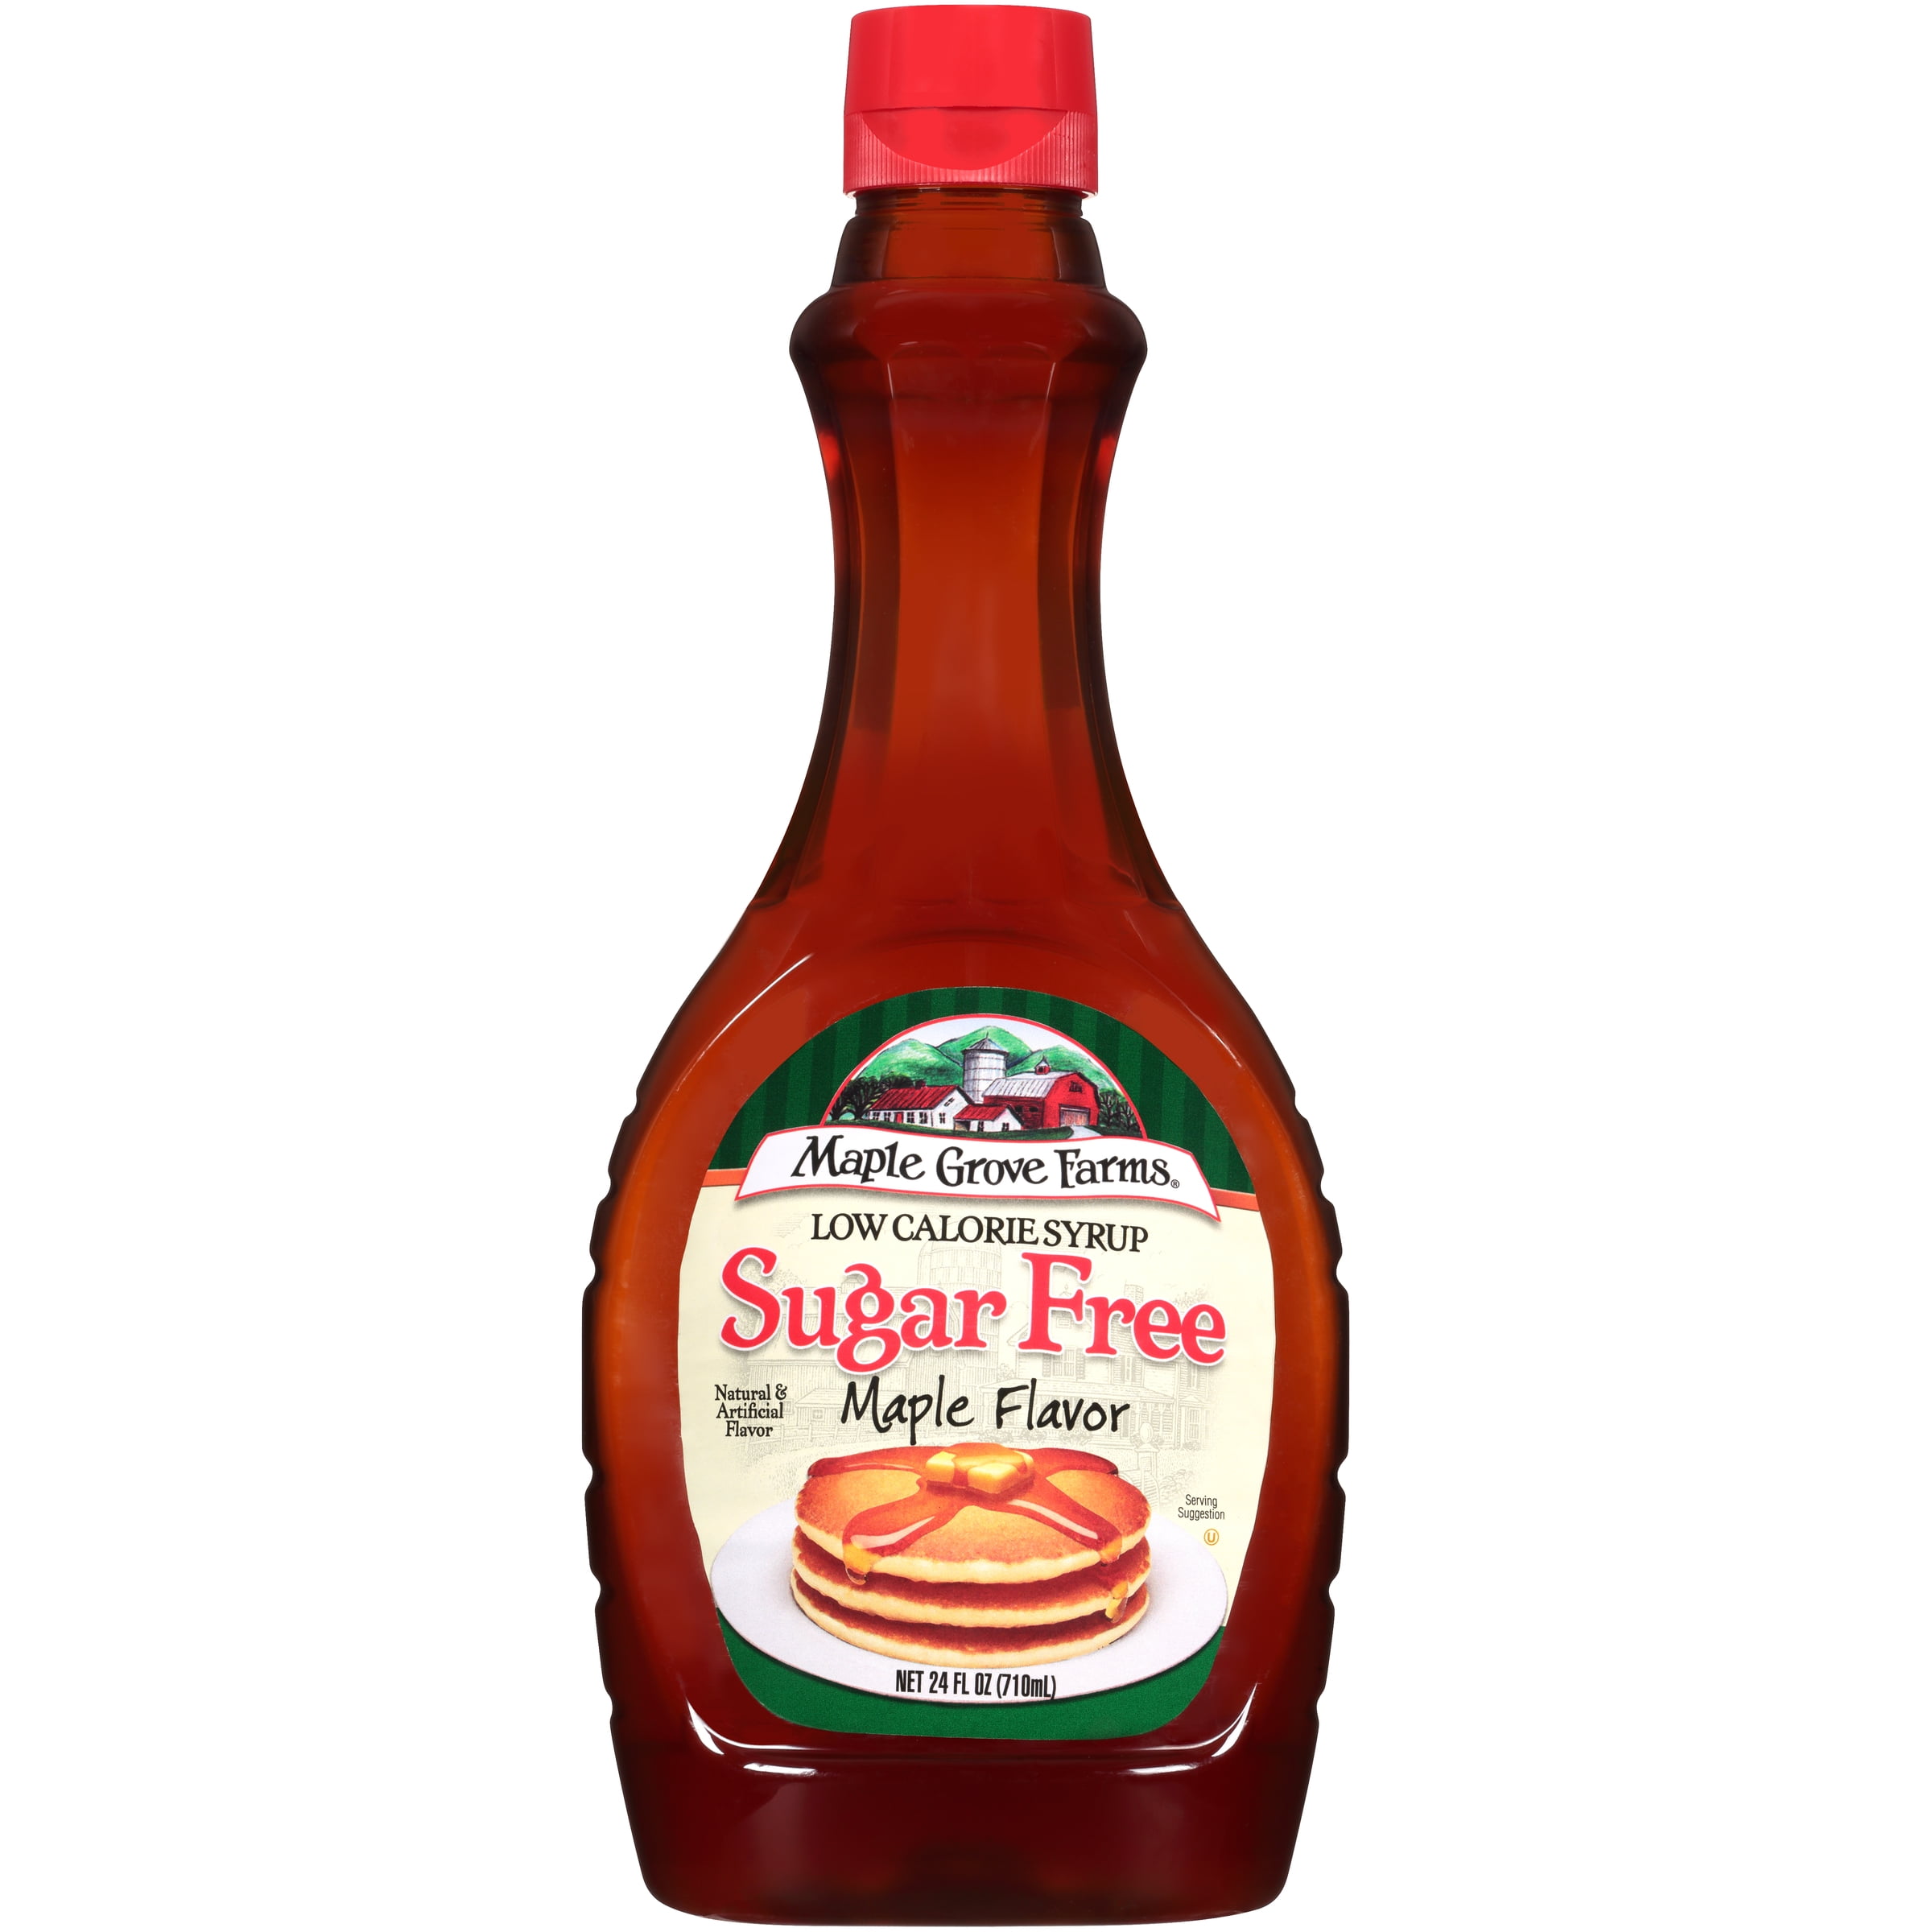 Maple Grove Farms Sugar Free Maple Flavor Syrup, 24 fl oz